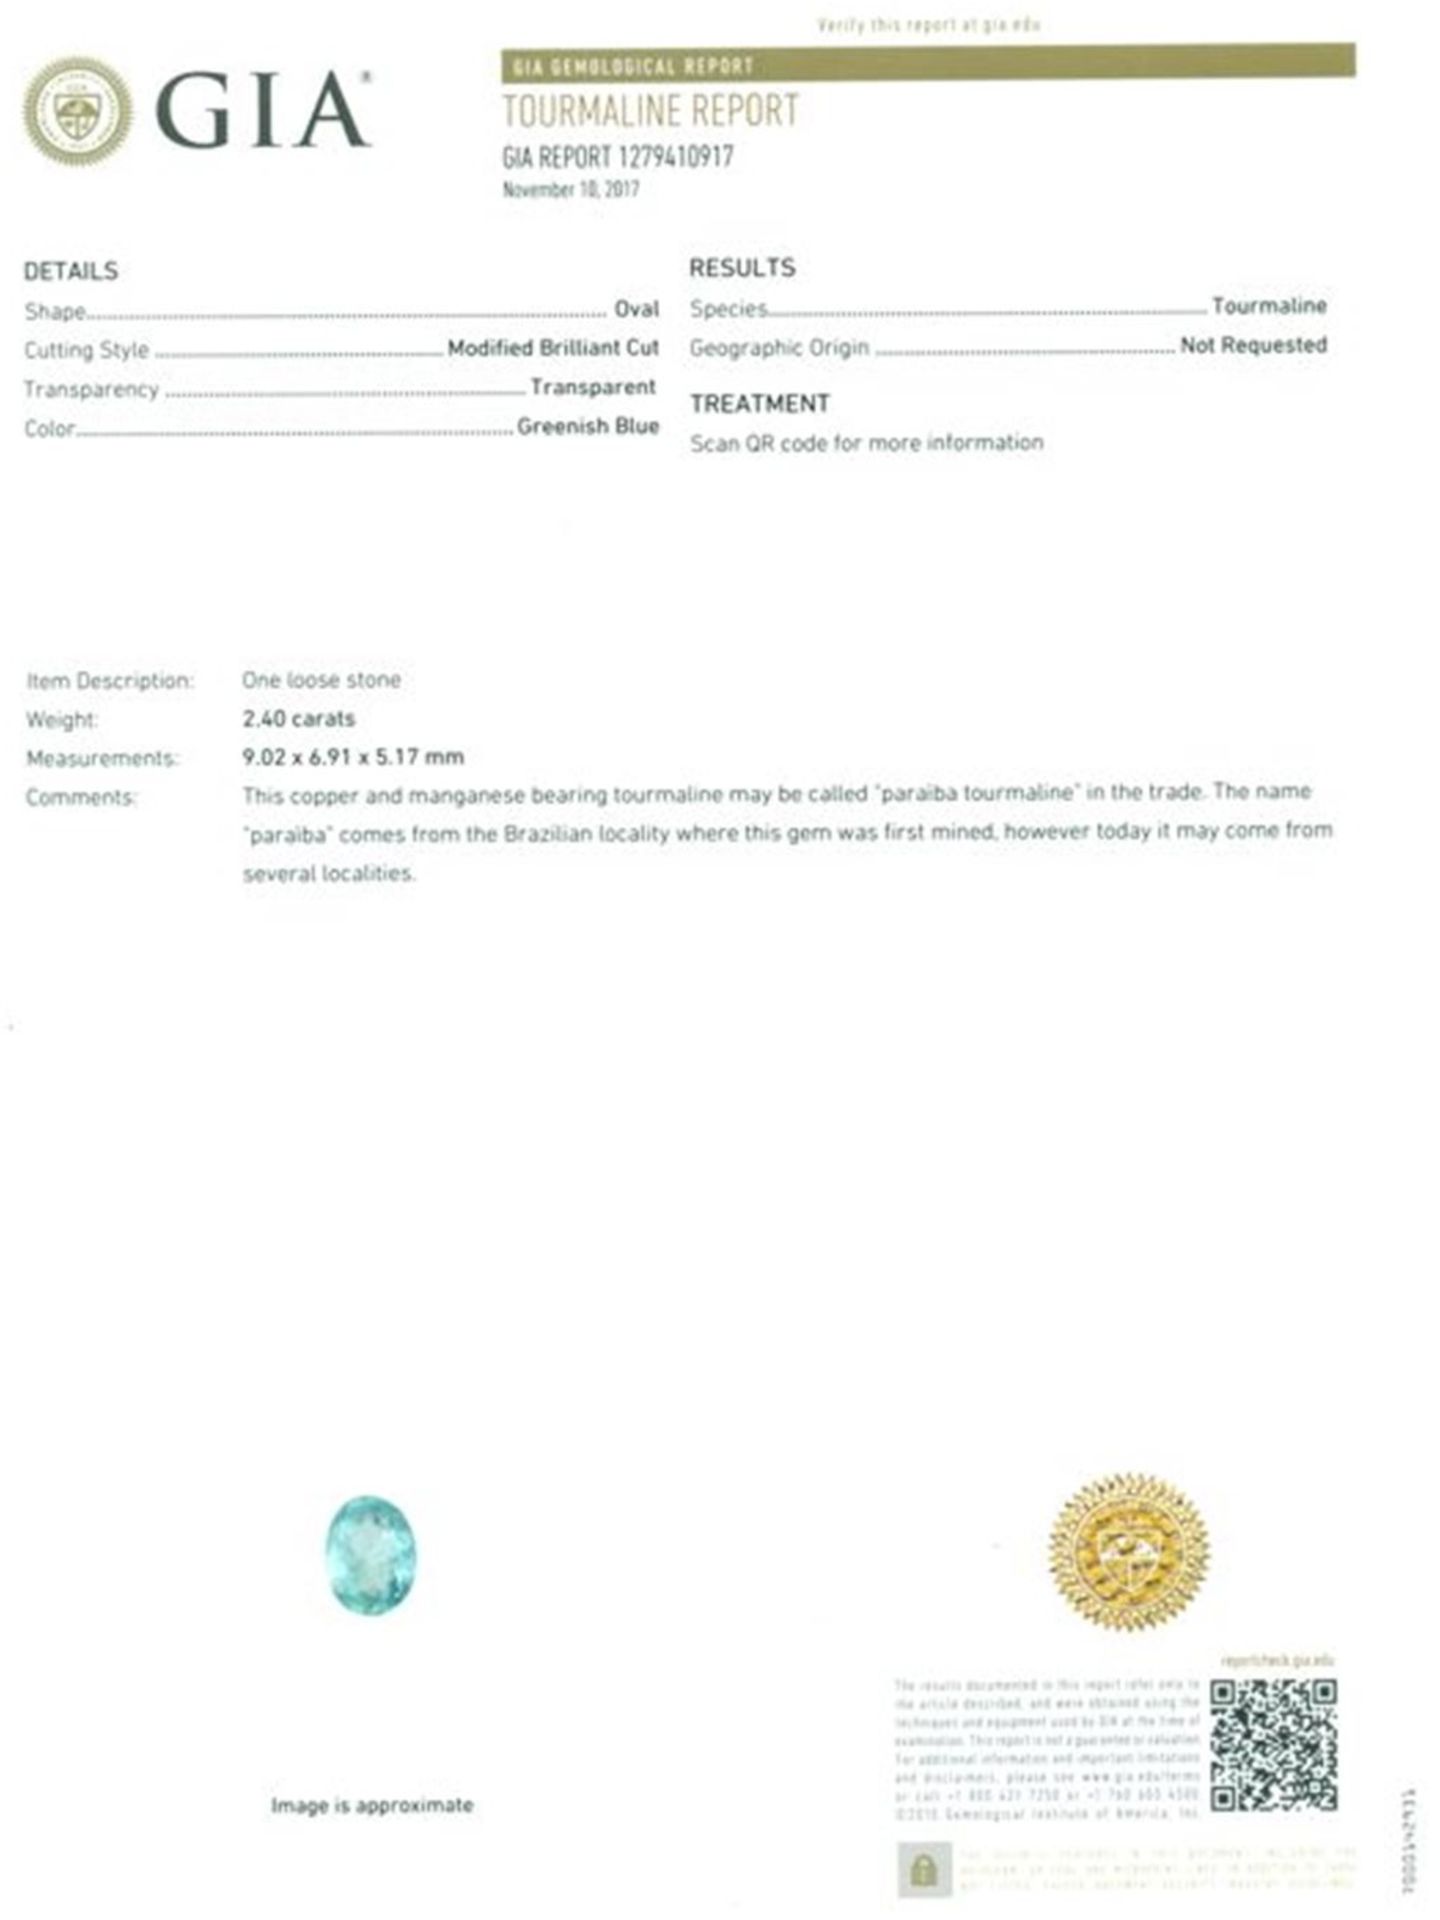 GIA Certified 2.40 ct. Neon Greenish Blue Paraiba Tourmaline - Image 2 of 6